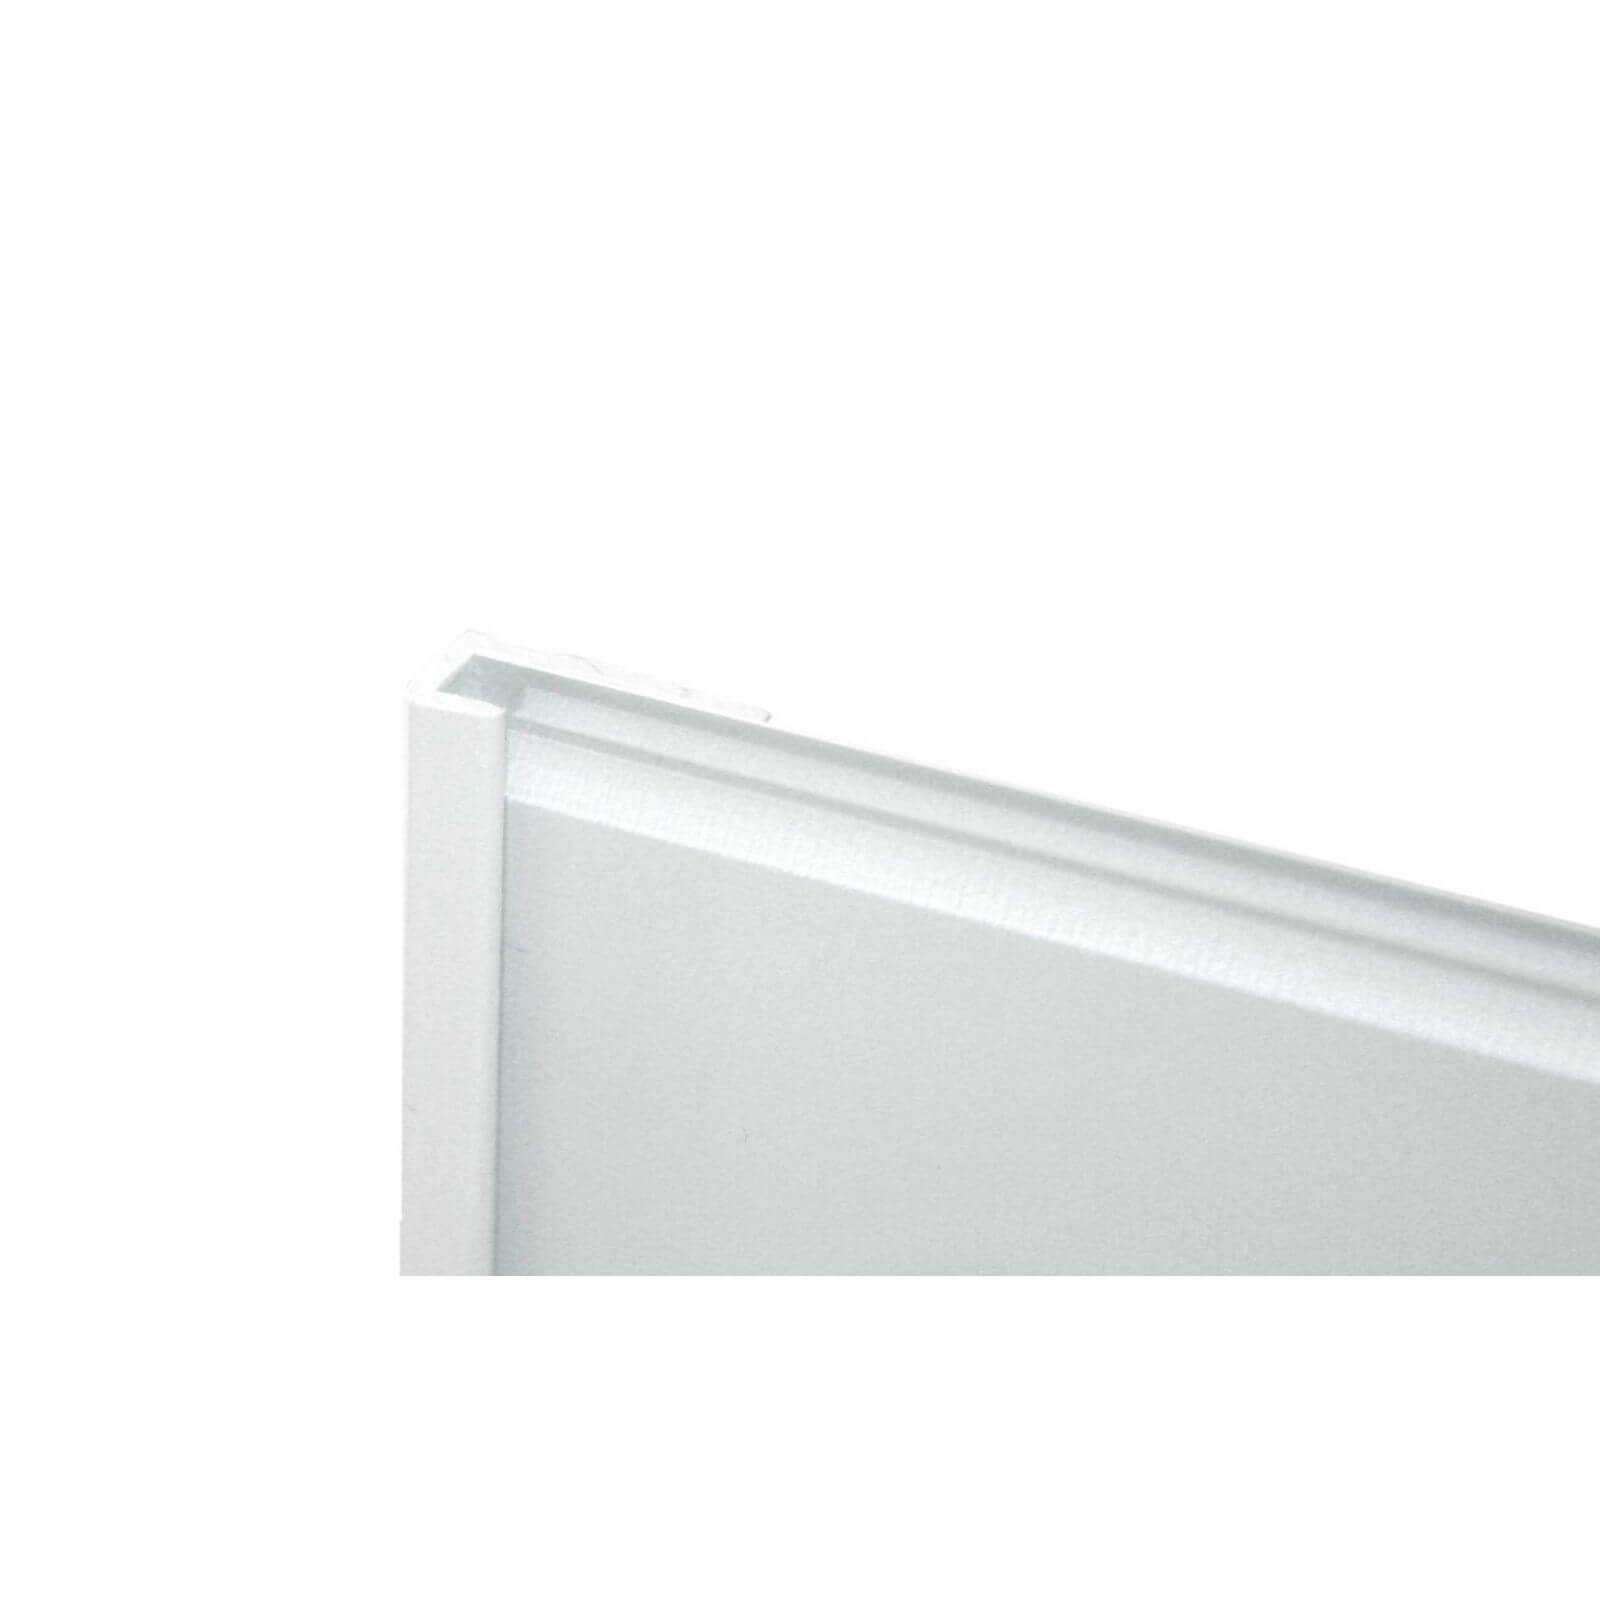 Zenolite Colour Matched PVC Edge Cap - 2500mm - White